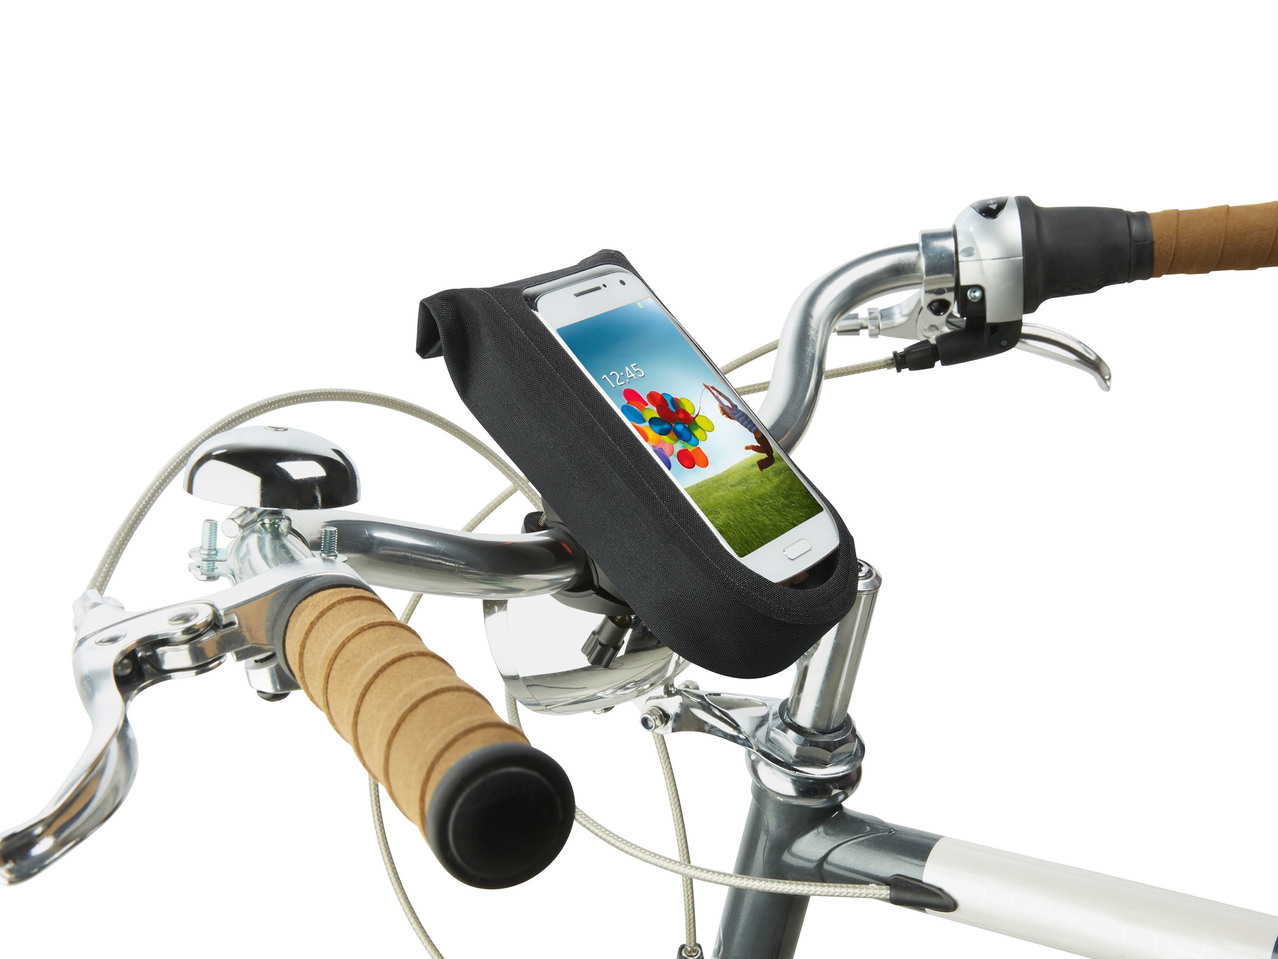 CRIVIT(R) Bolsa de Telemóvel para Bicicleta